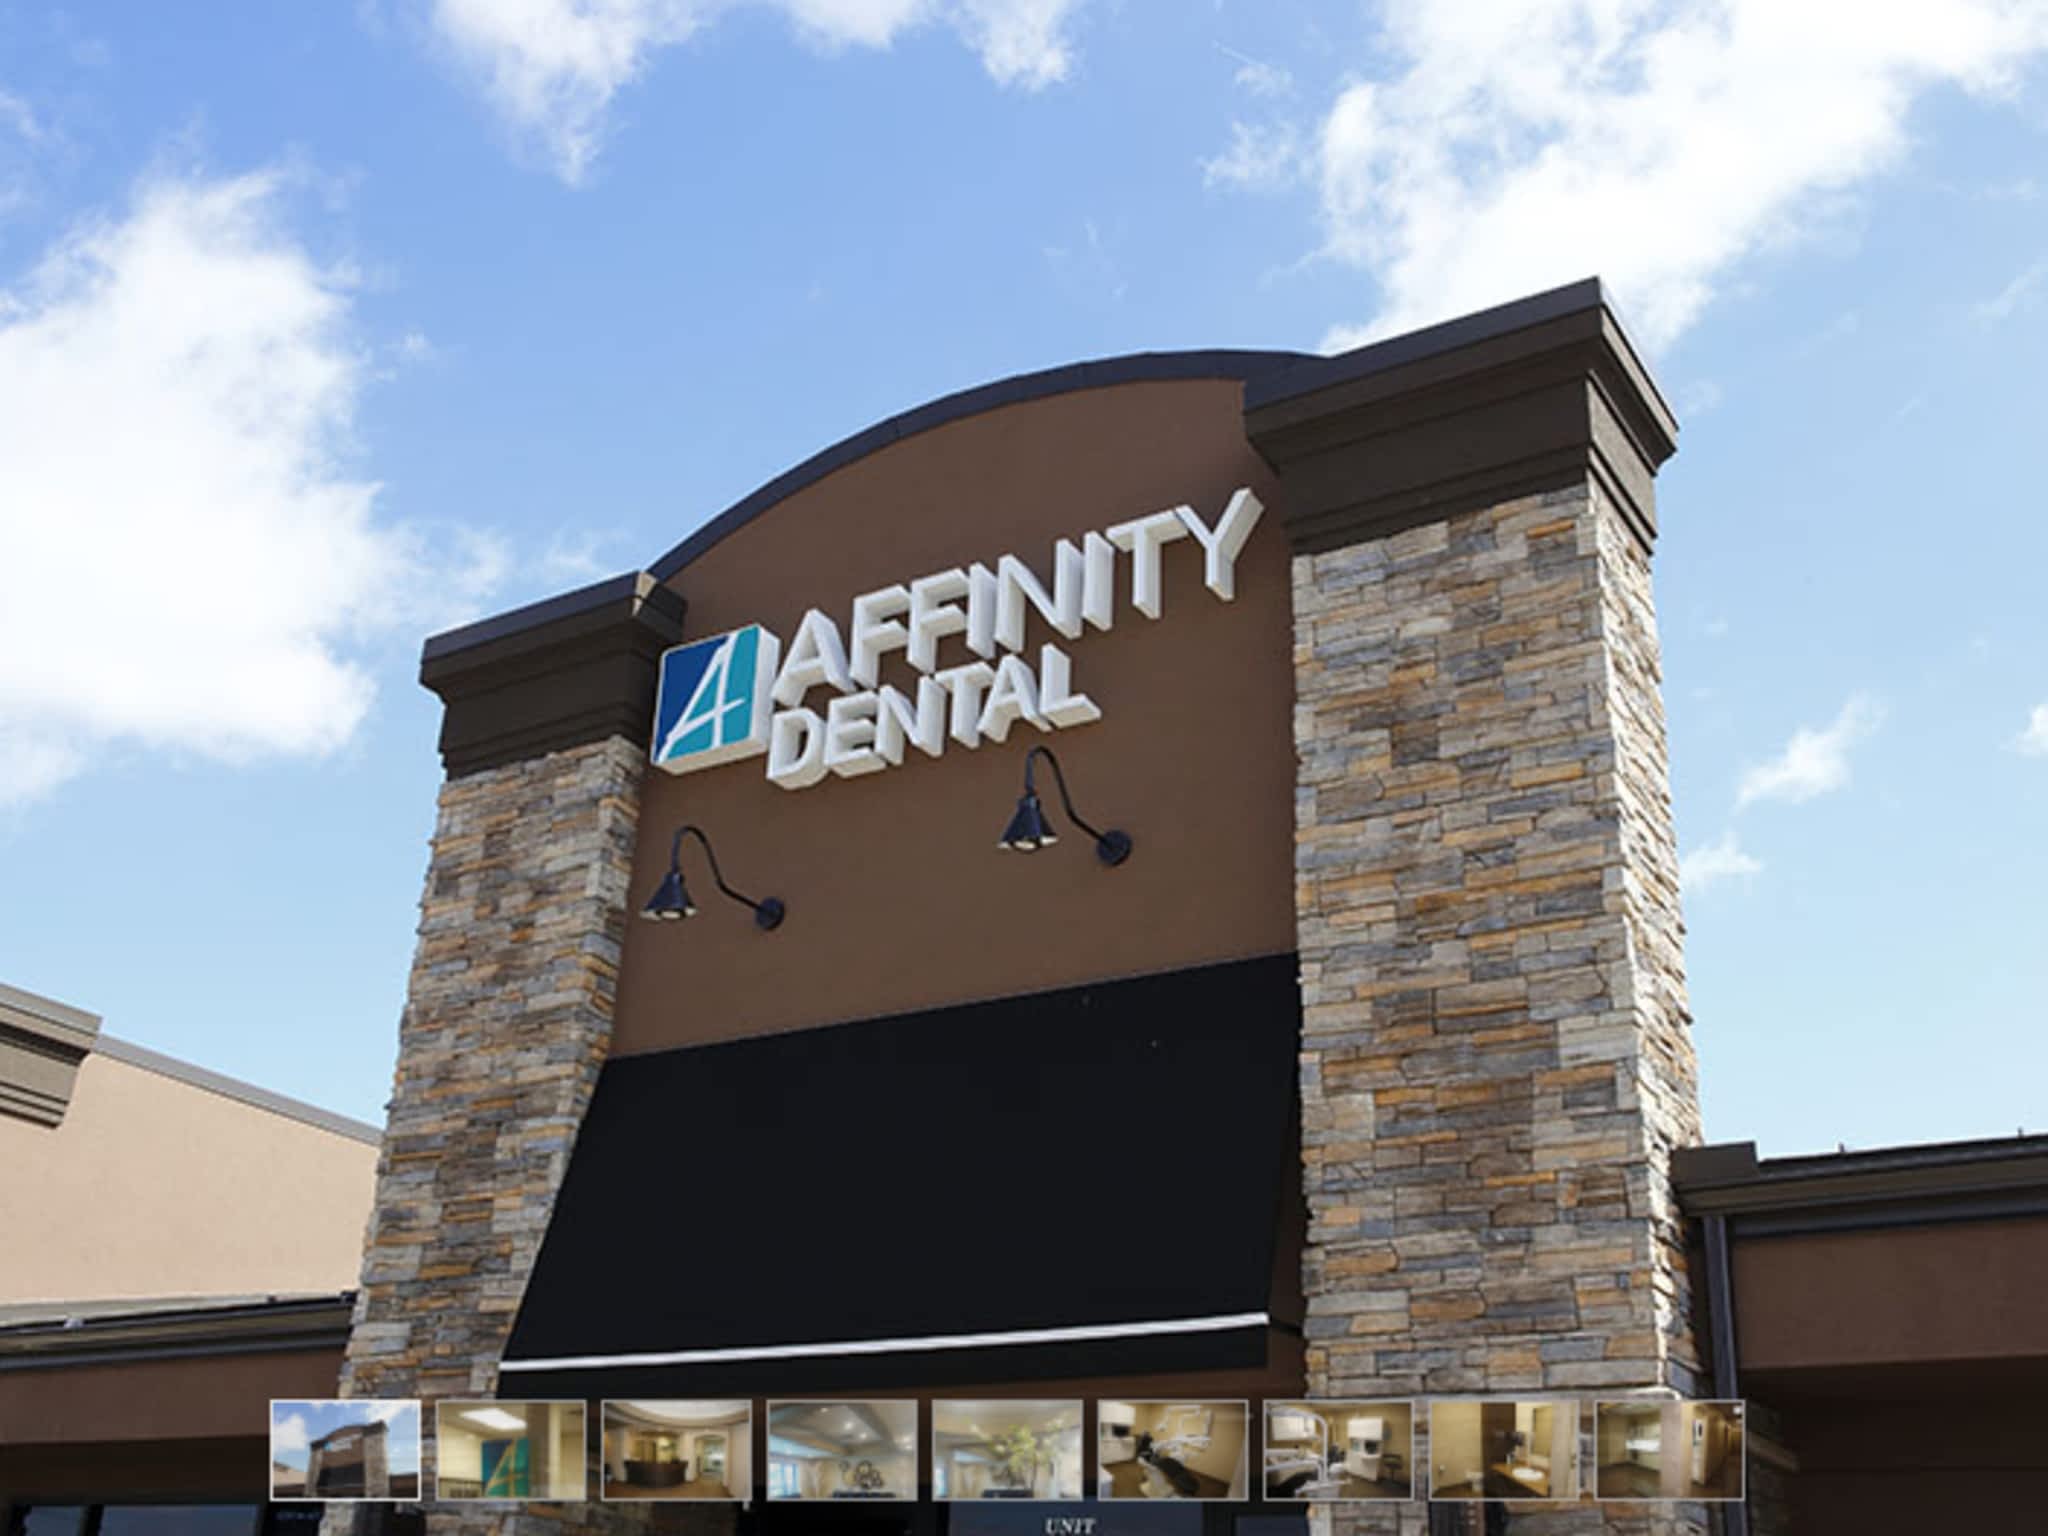 photo Affinity Dental Centres